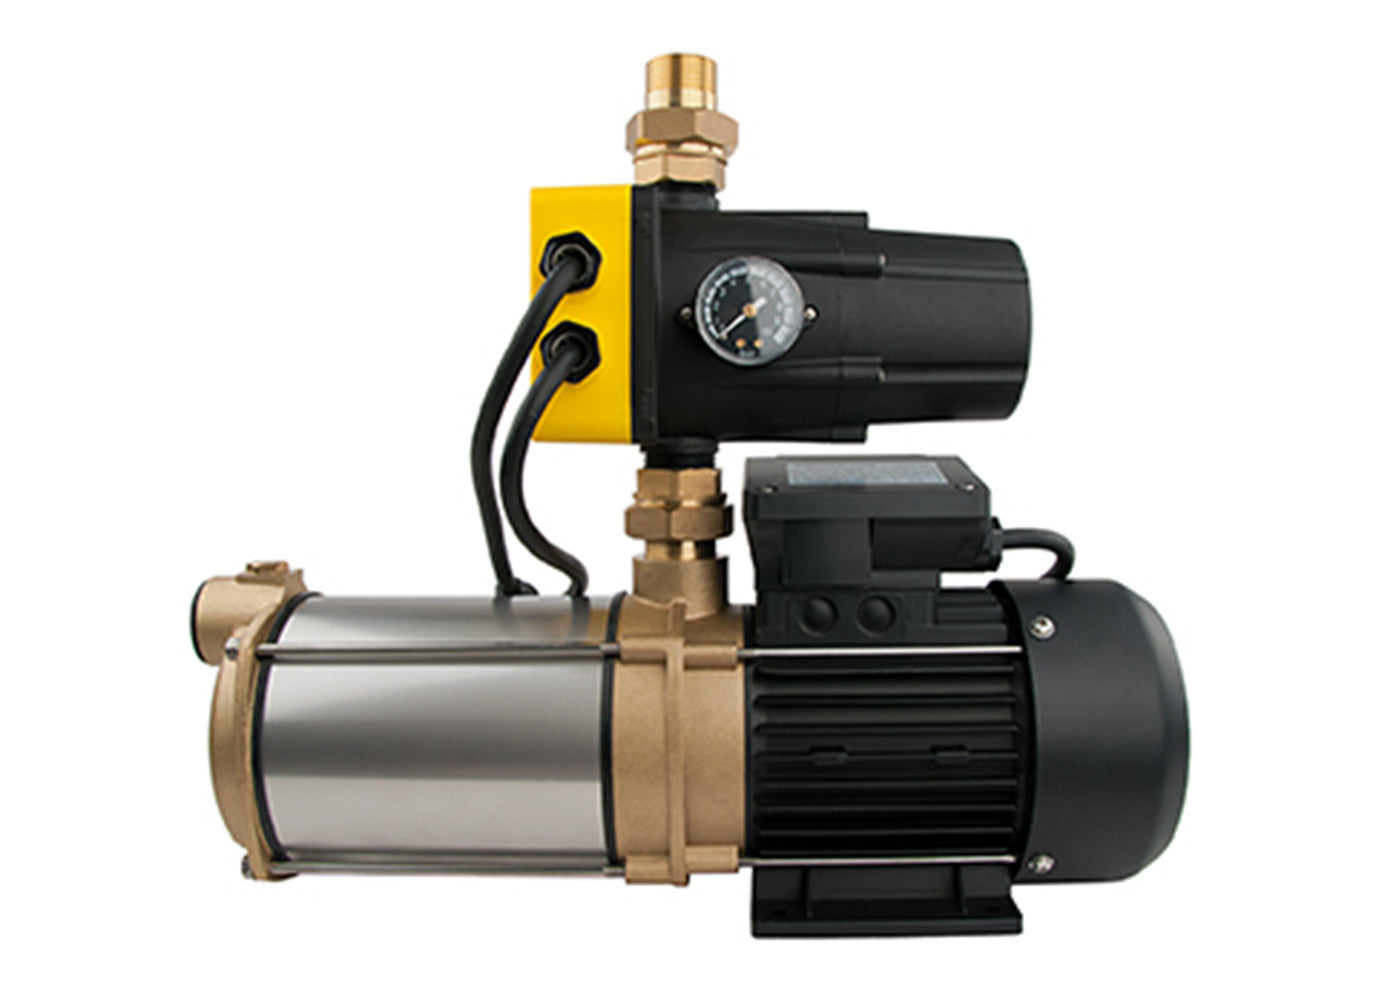 Hauswasserautomat CPS 15-5MB/Kit 05 OPTIMATIC pro für das Haus